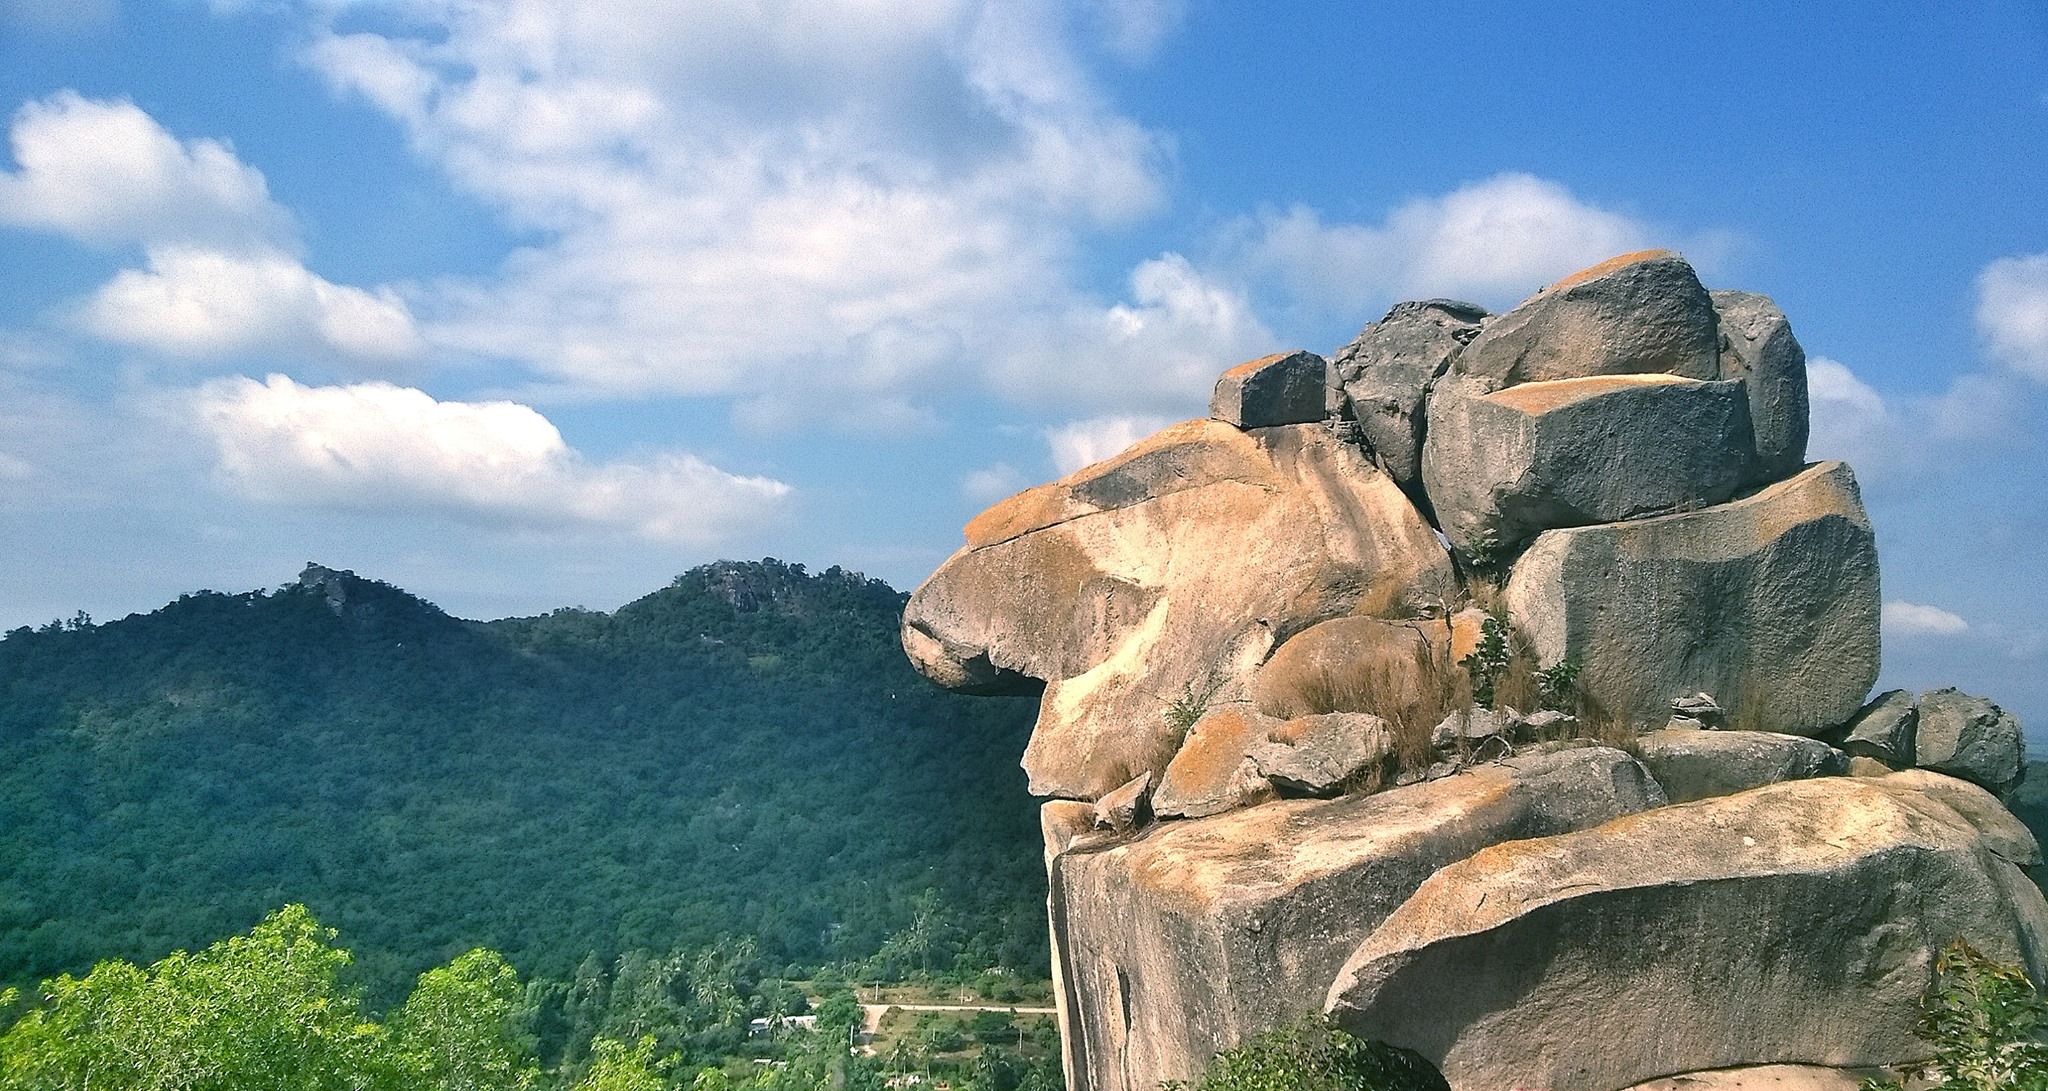 Núi Ông Két An Giang – Thất sơn 7 núi ở An Giang